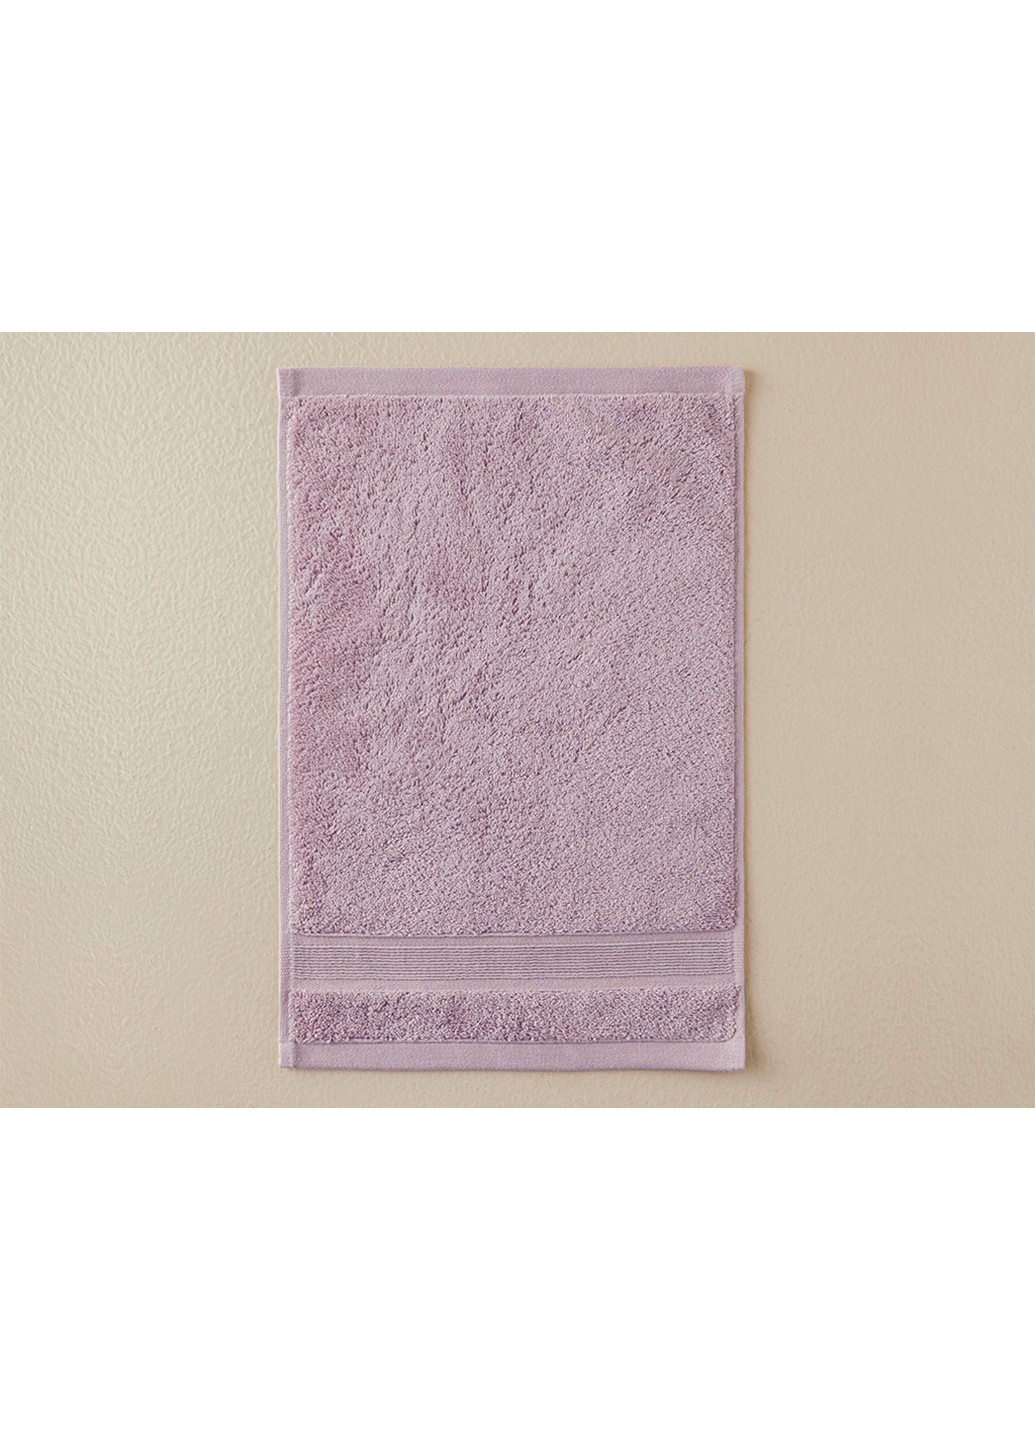 English Home полотенце для рук, 30х45 см однотонный лиловый производство - Турция